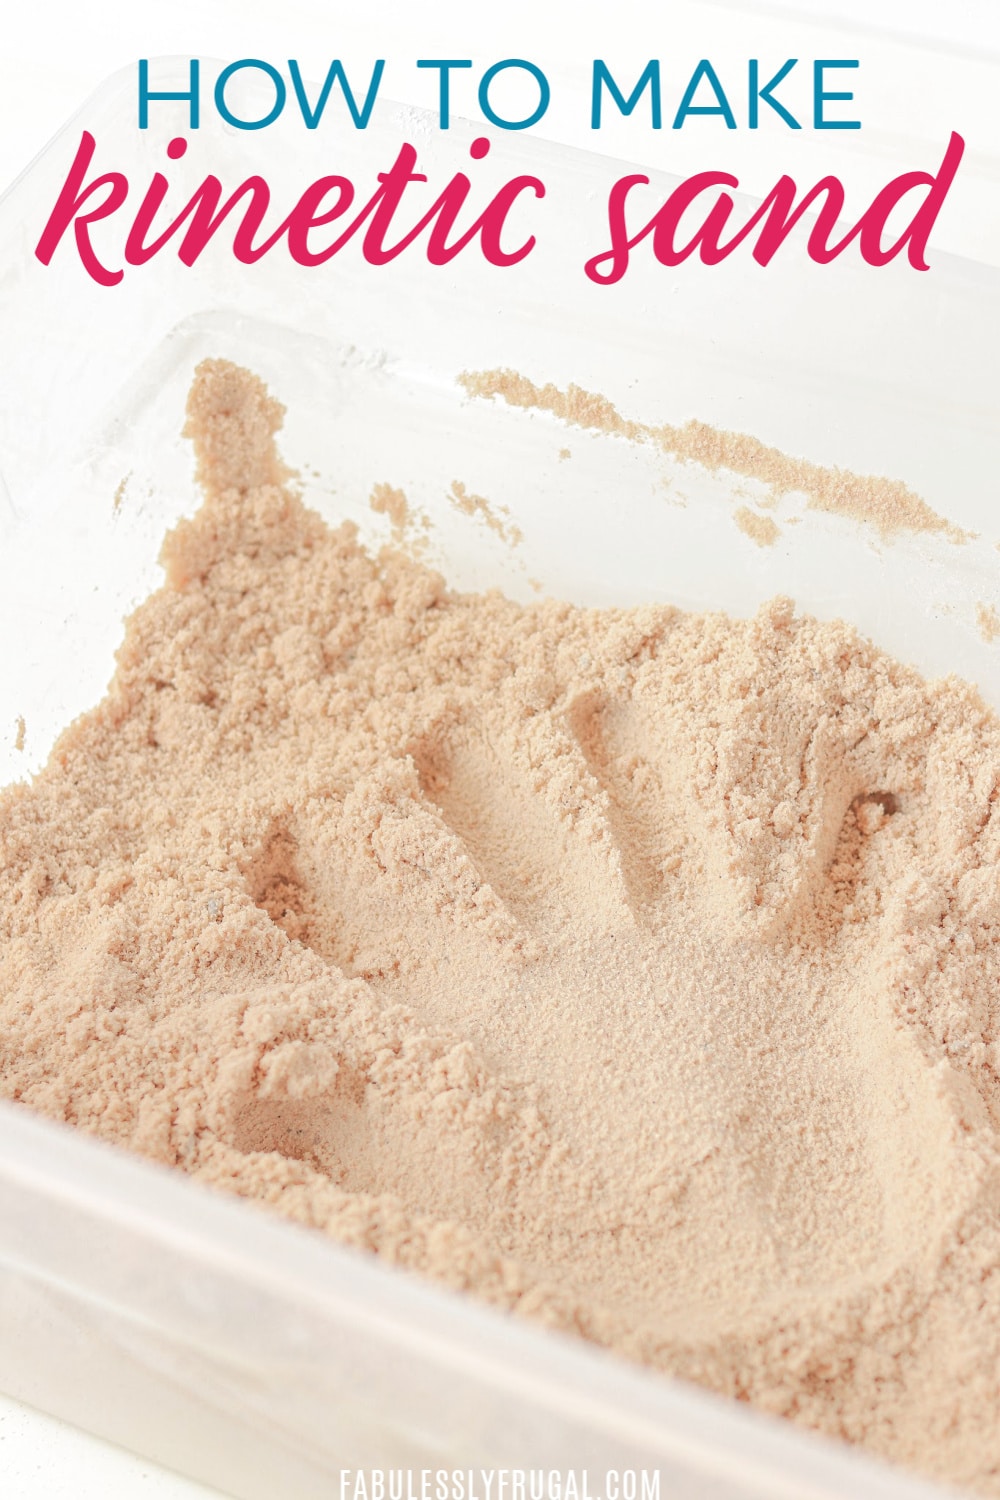 Make your own kinetic sand